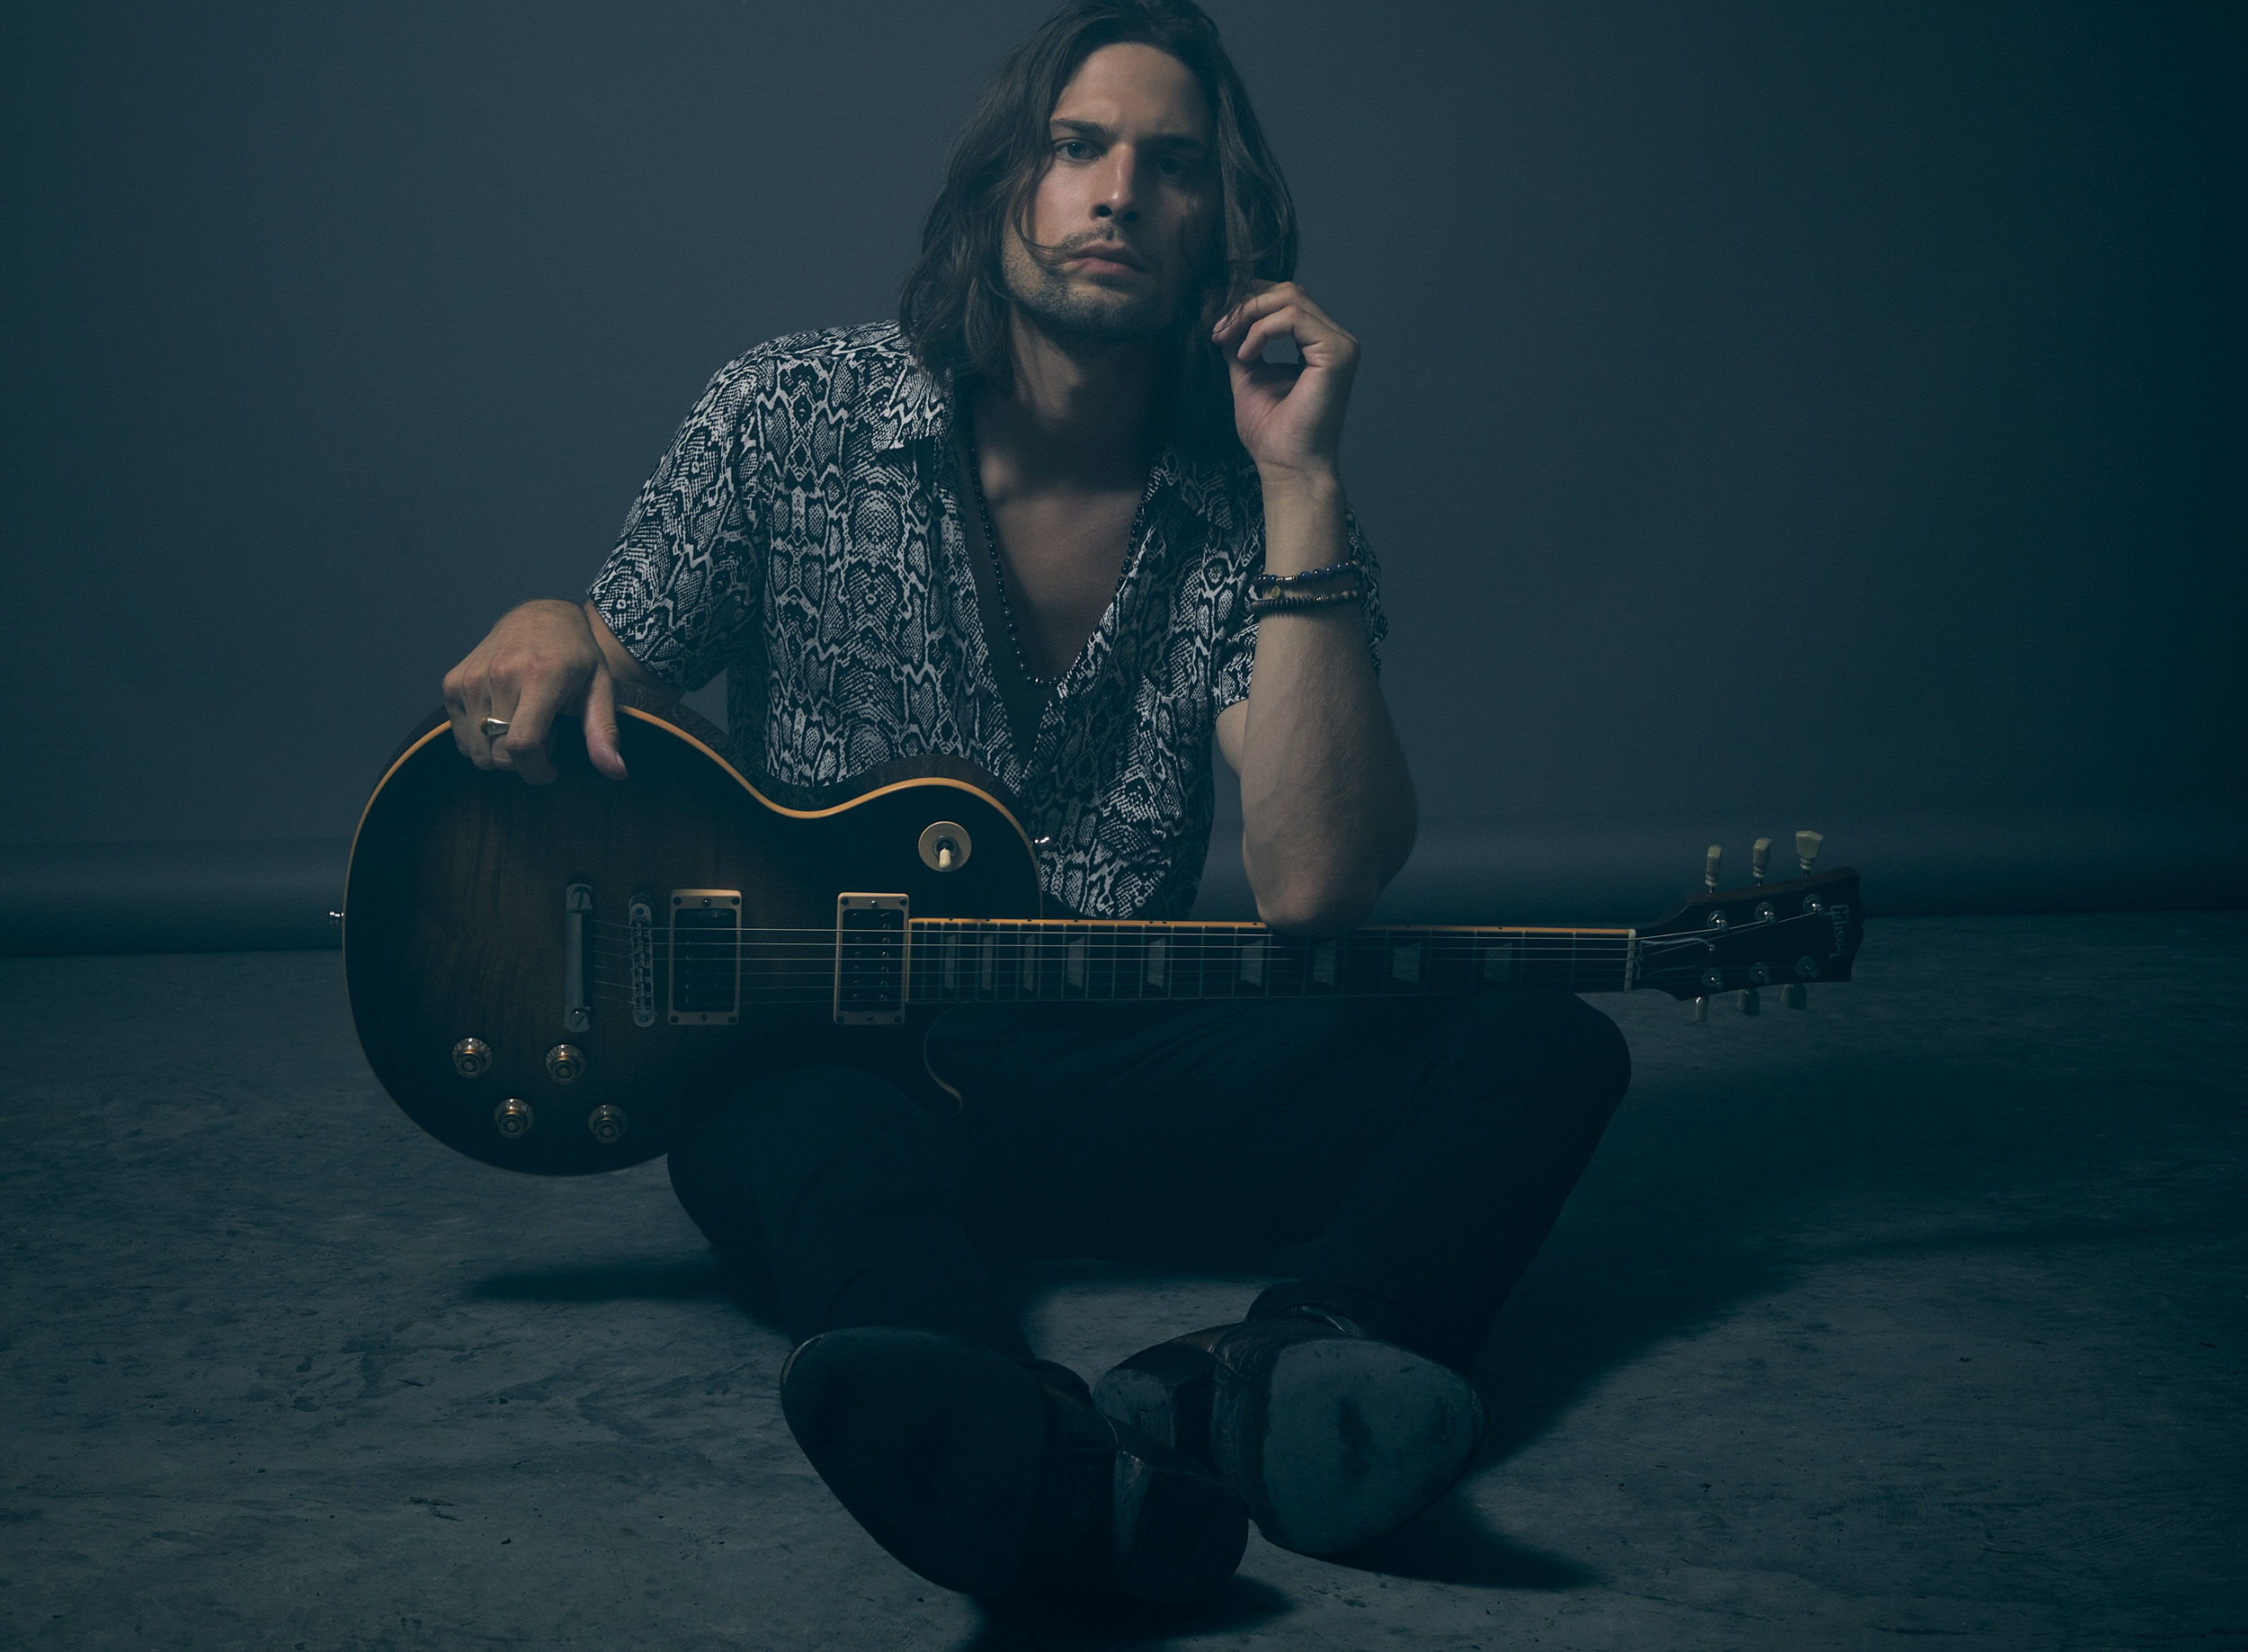 David Myhre studio portrait sitting with guitar